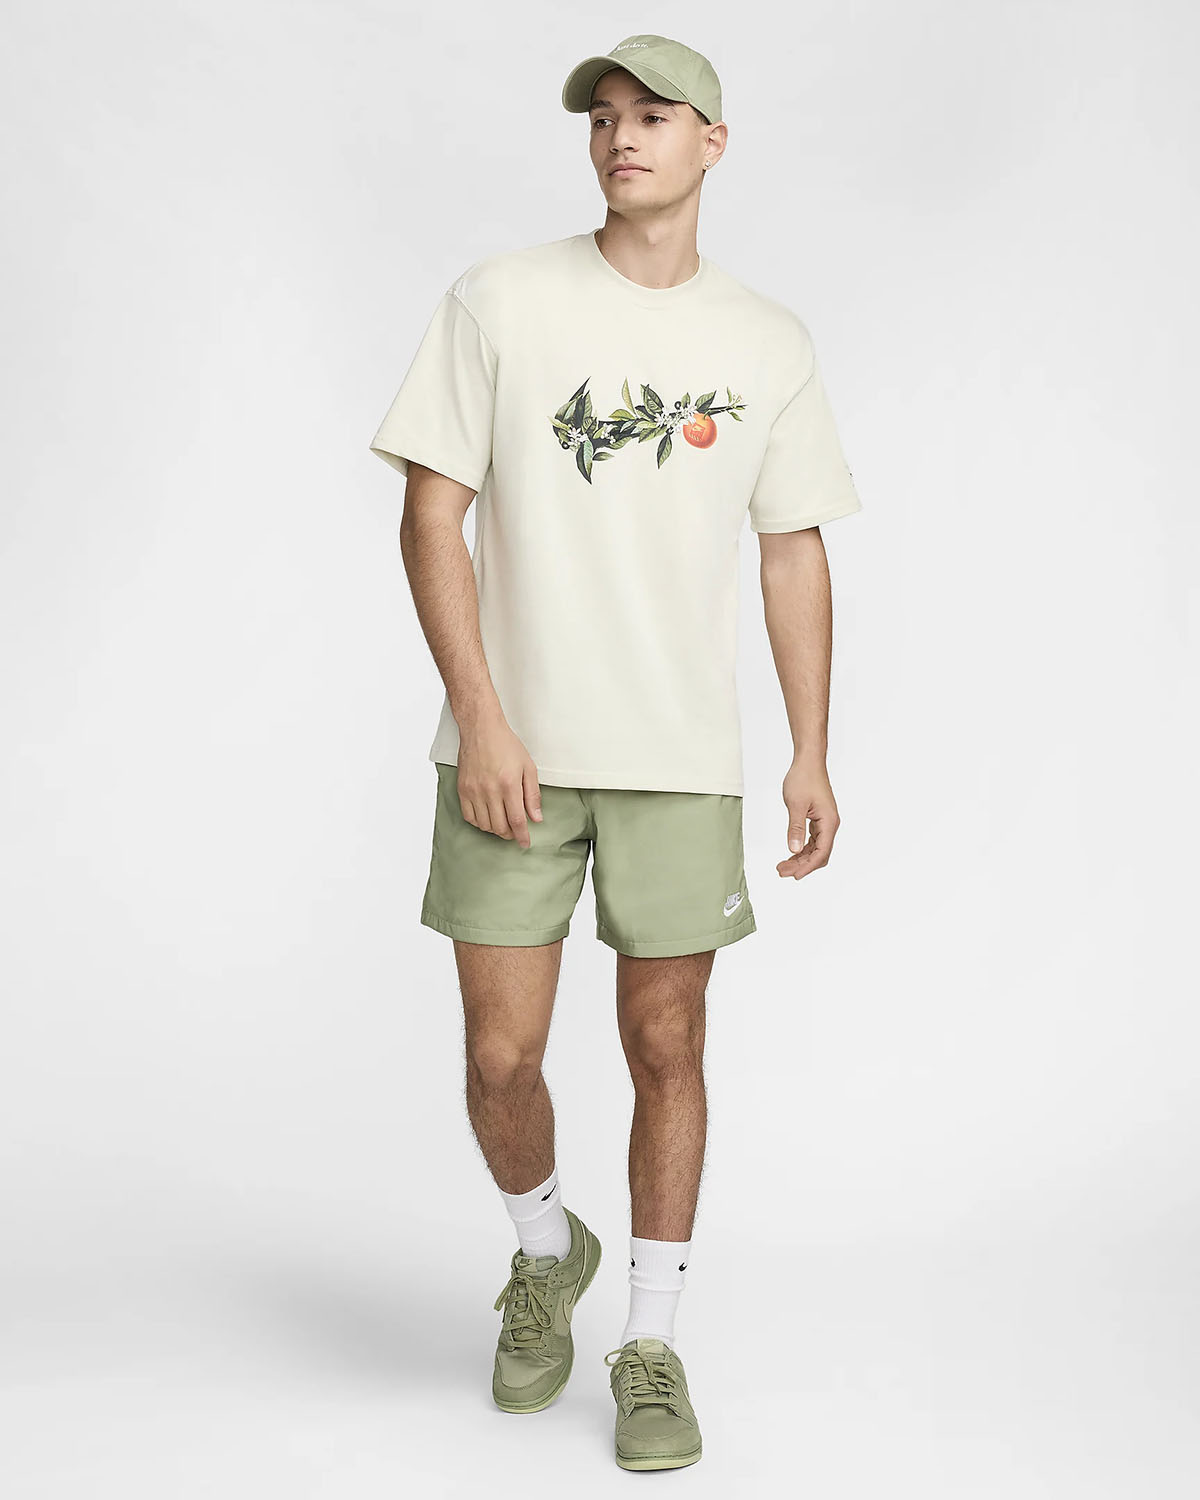 Nike Sportswear Tropical T Shirt Sea Glass Outfit